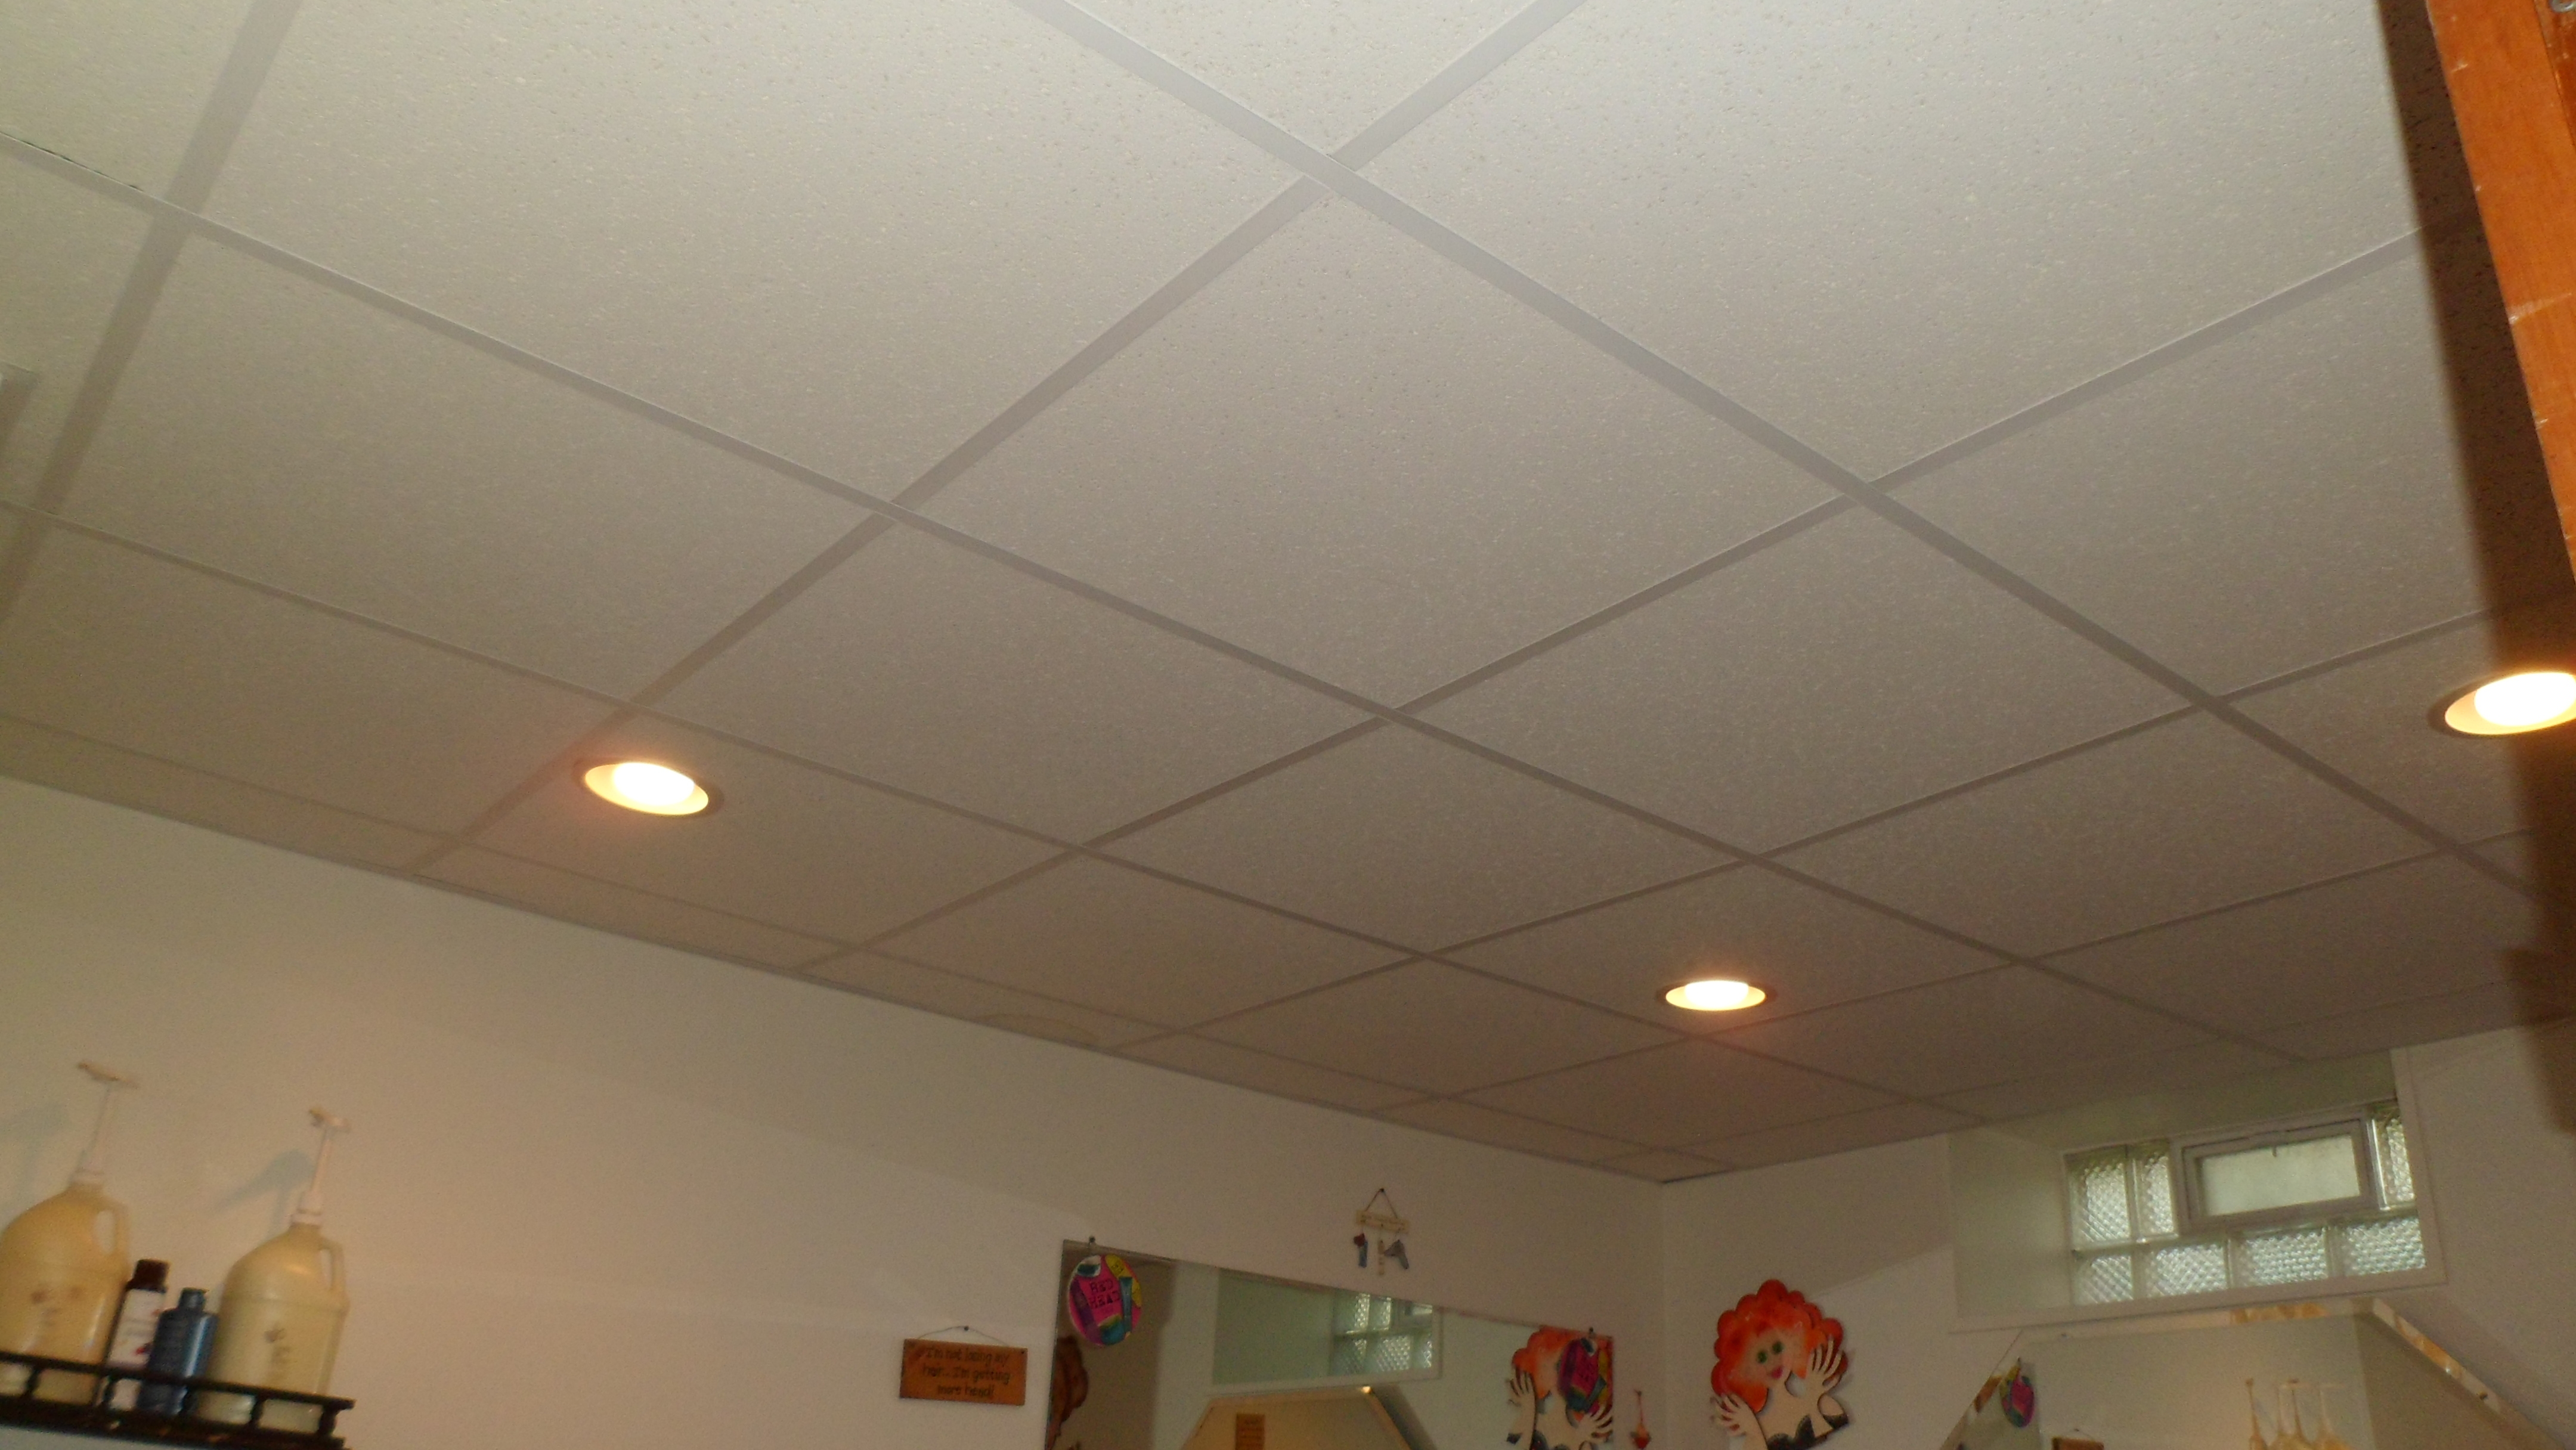 Hanging Recessed Lights Drop Ceilinghanging recessed lights in drop ceiling about ceiling tile